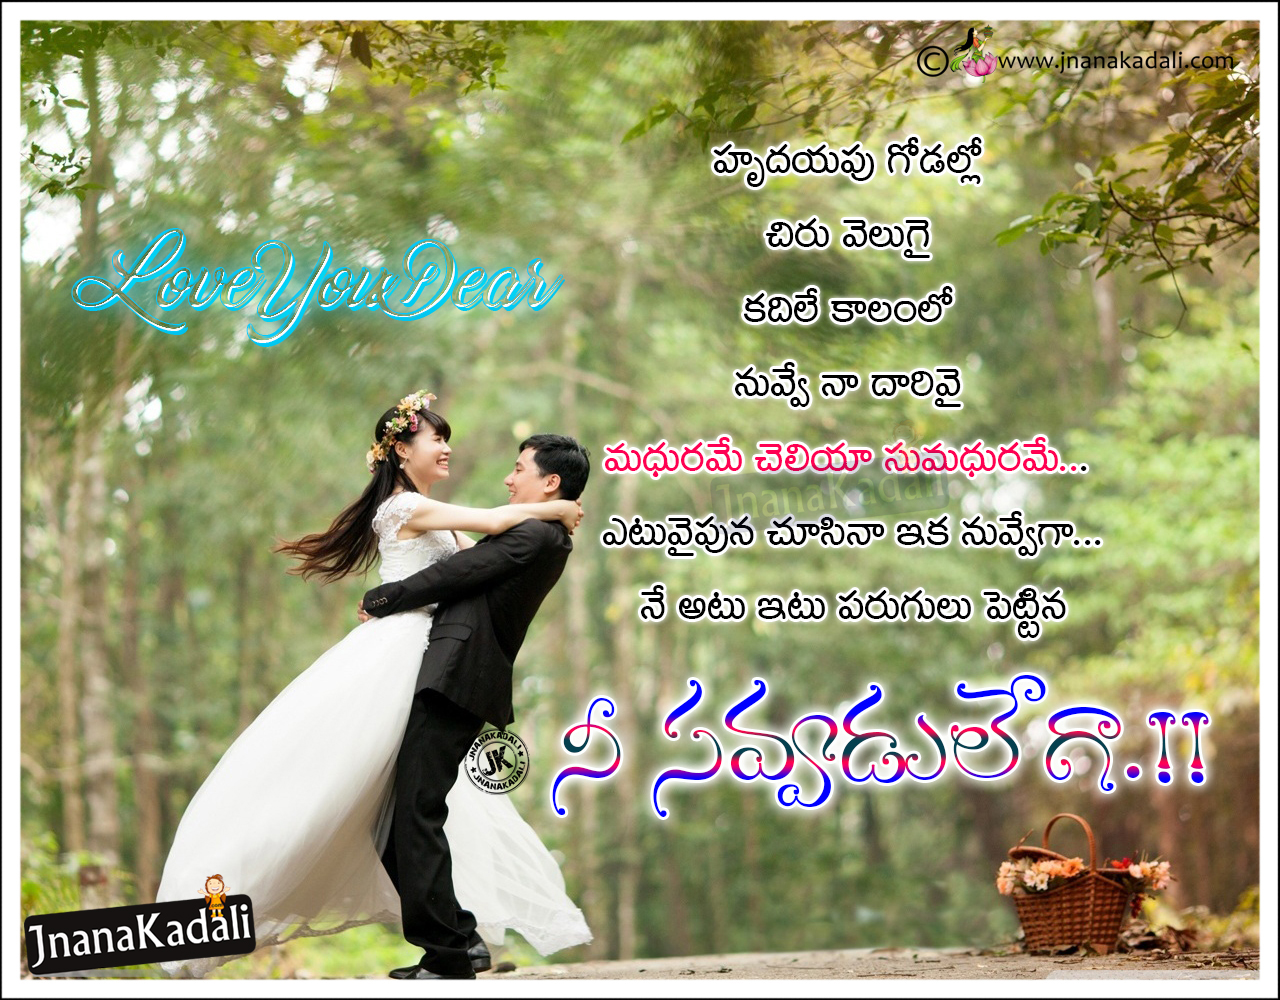 Romantic Love Quotes In Telugu Images Download at Best Quotes